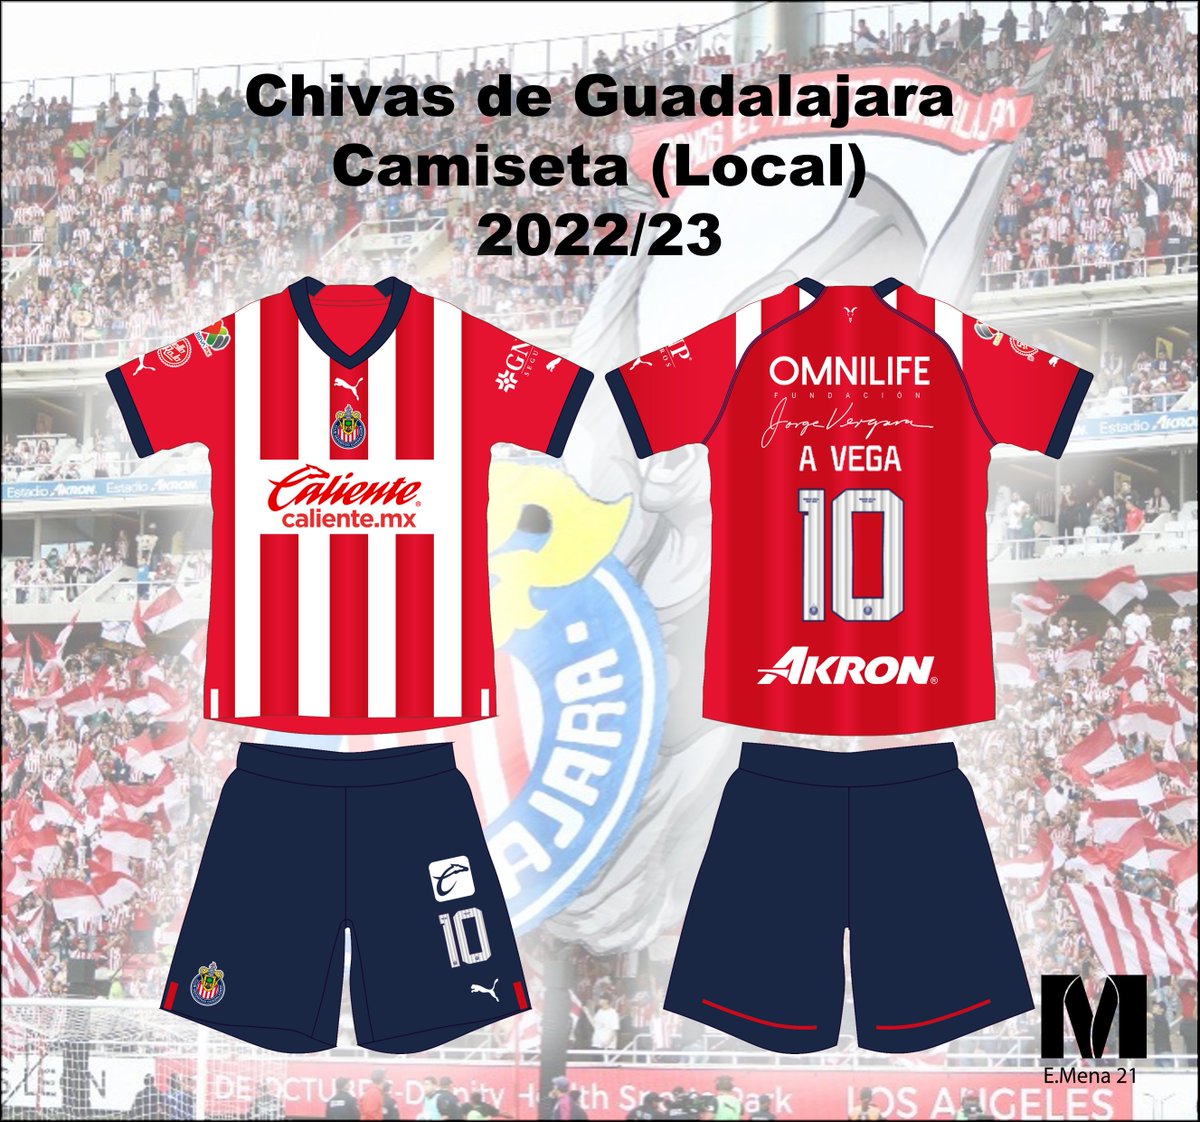 Chivas de Guadalajara
Camiseta (local) 2022/23
ilustrada
🔴⚪🔴⚪🔴 
#ChivasdeGuadalajara #Chivas #ChivasRayadas #RebañoSagrado #Rojiblancos #Campeonísimo #puma #LigaMX #Guadalajara 
@Chivas @ChileKits @PaintKits @LuchoLasS @ciccioscommessa @CambioCamiseta @LigaBBVAMX